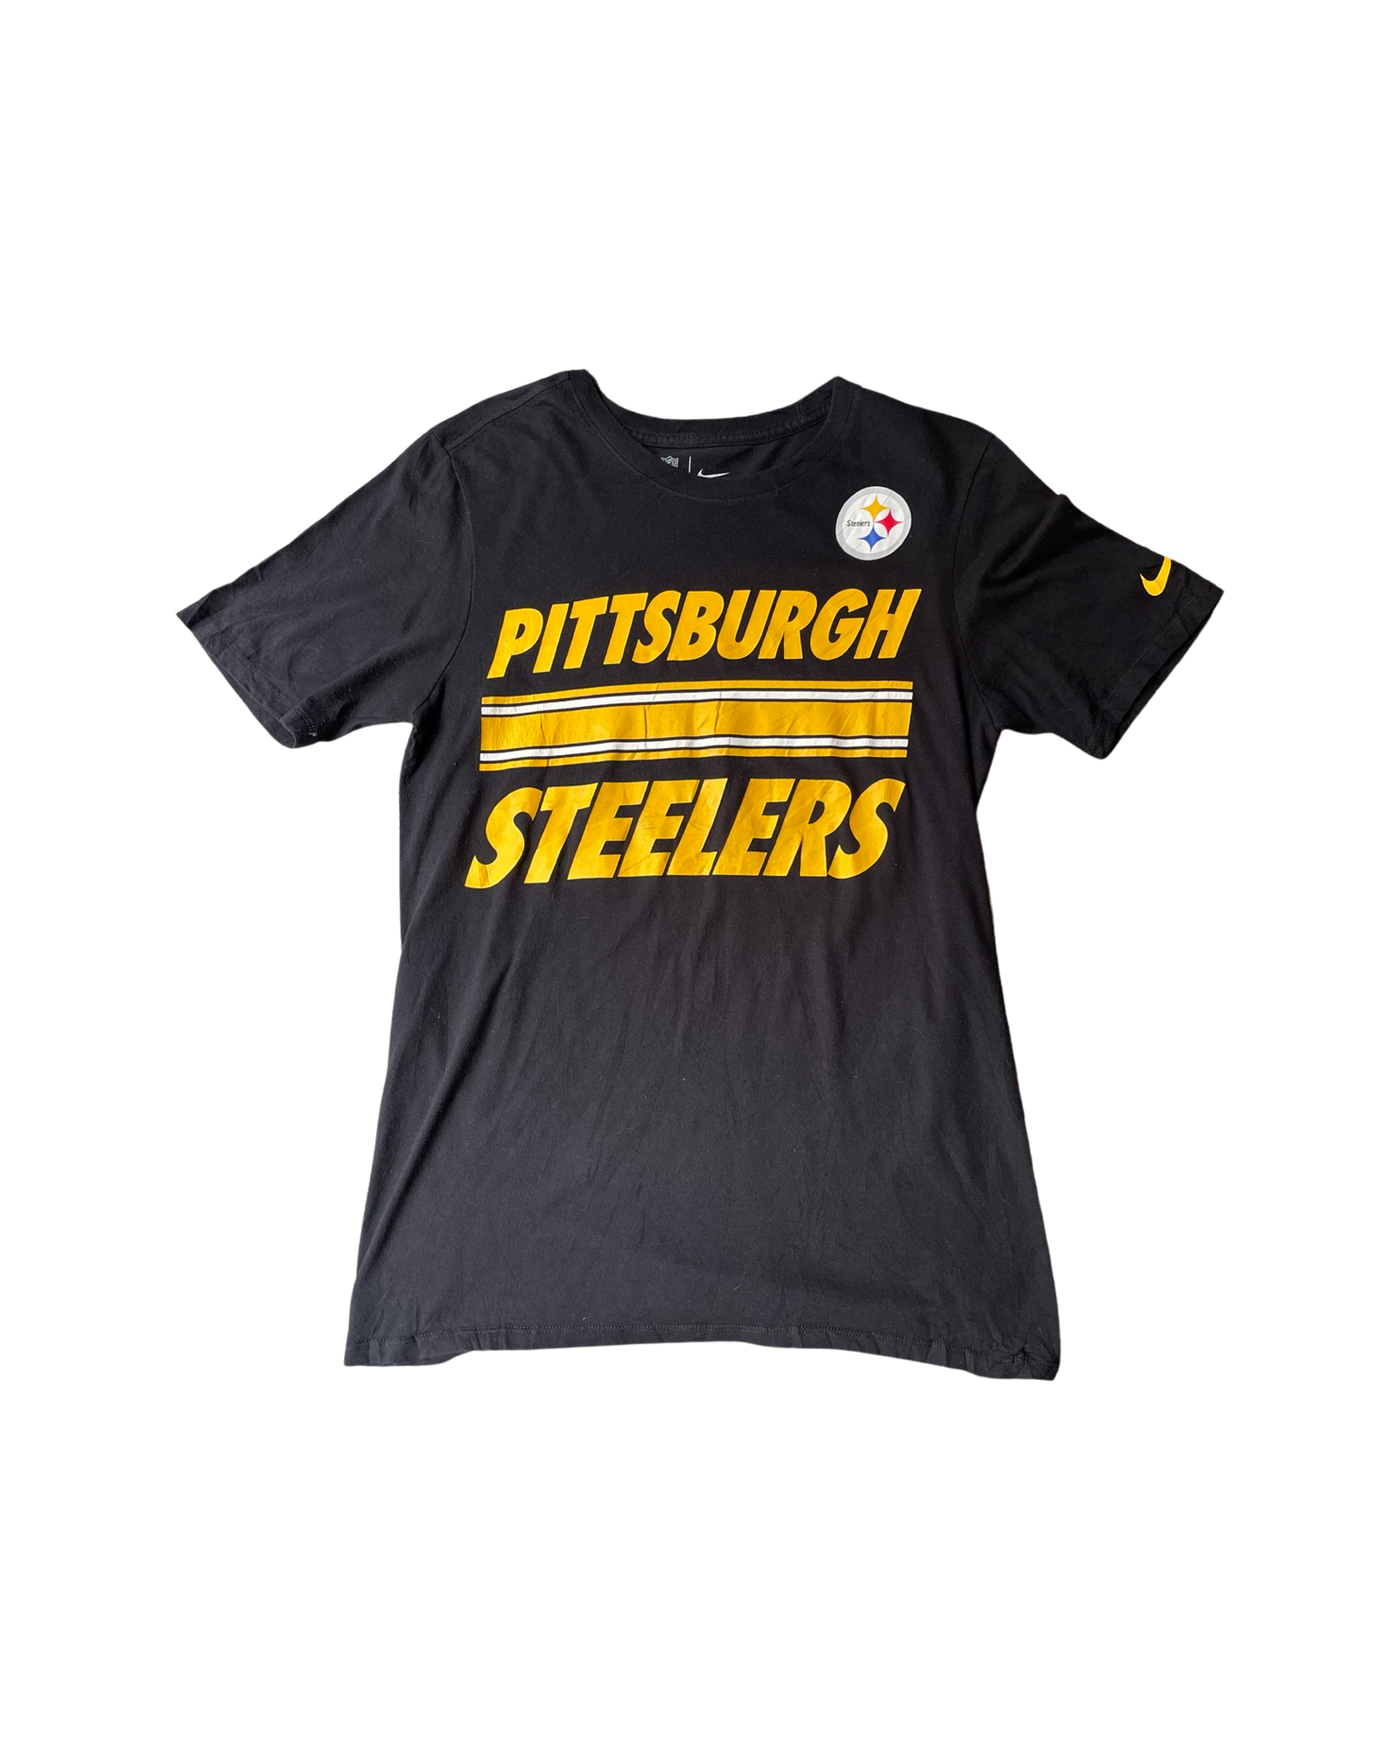 Vintage NFL Pittsburg Steelers T-Shirt